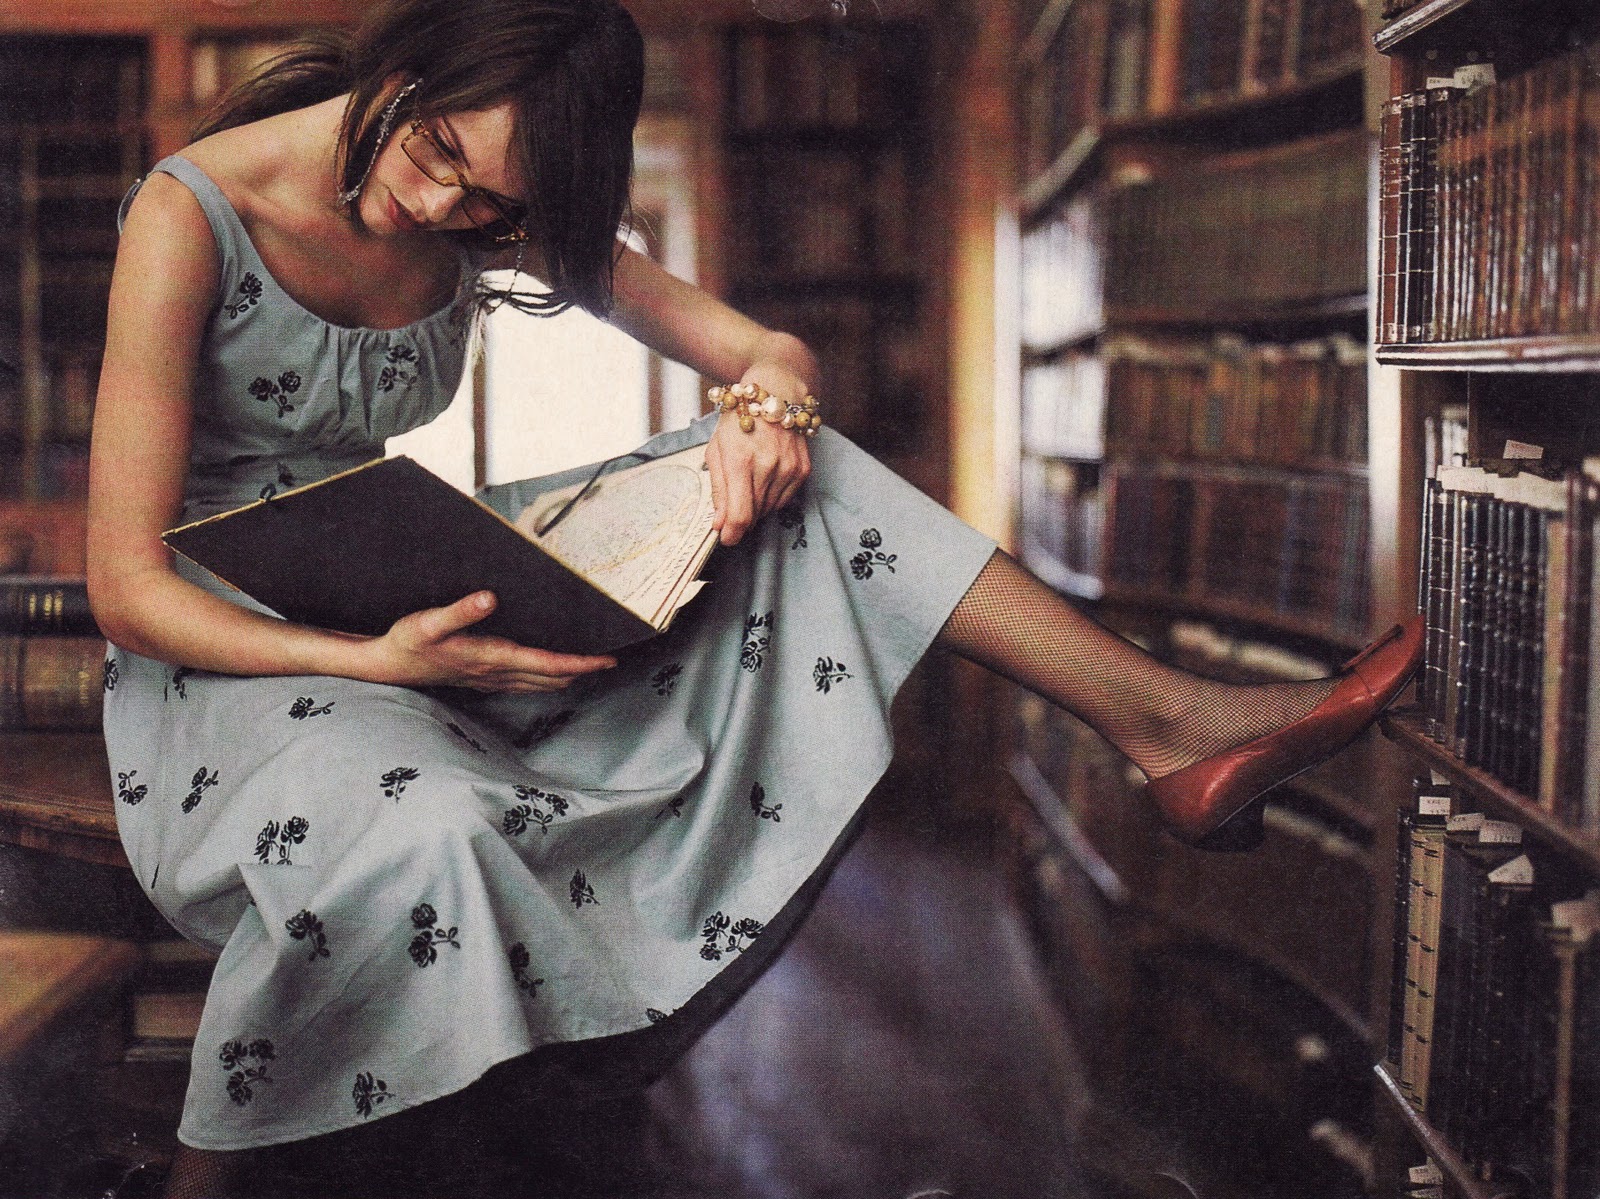 She reads in the evening. Женщина с книгой. Чтение книг. Девушка читает. Женщина читает книгу.